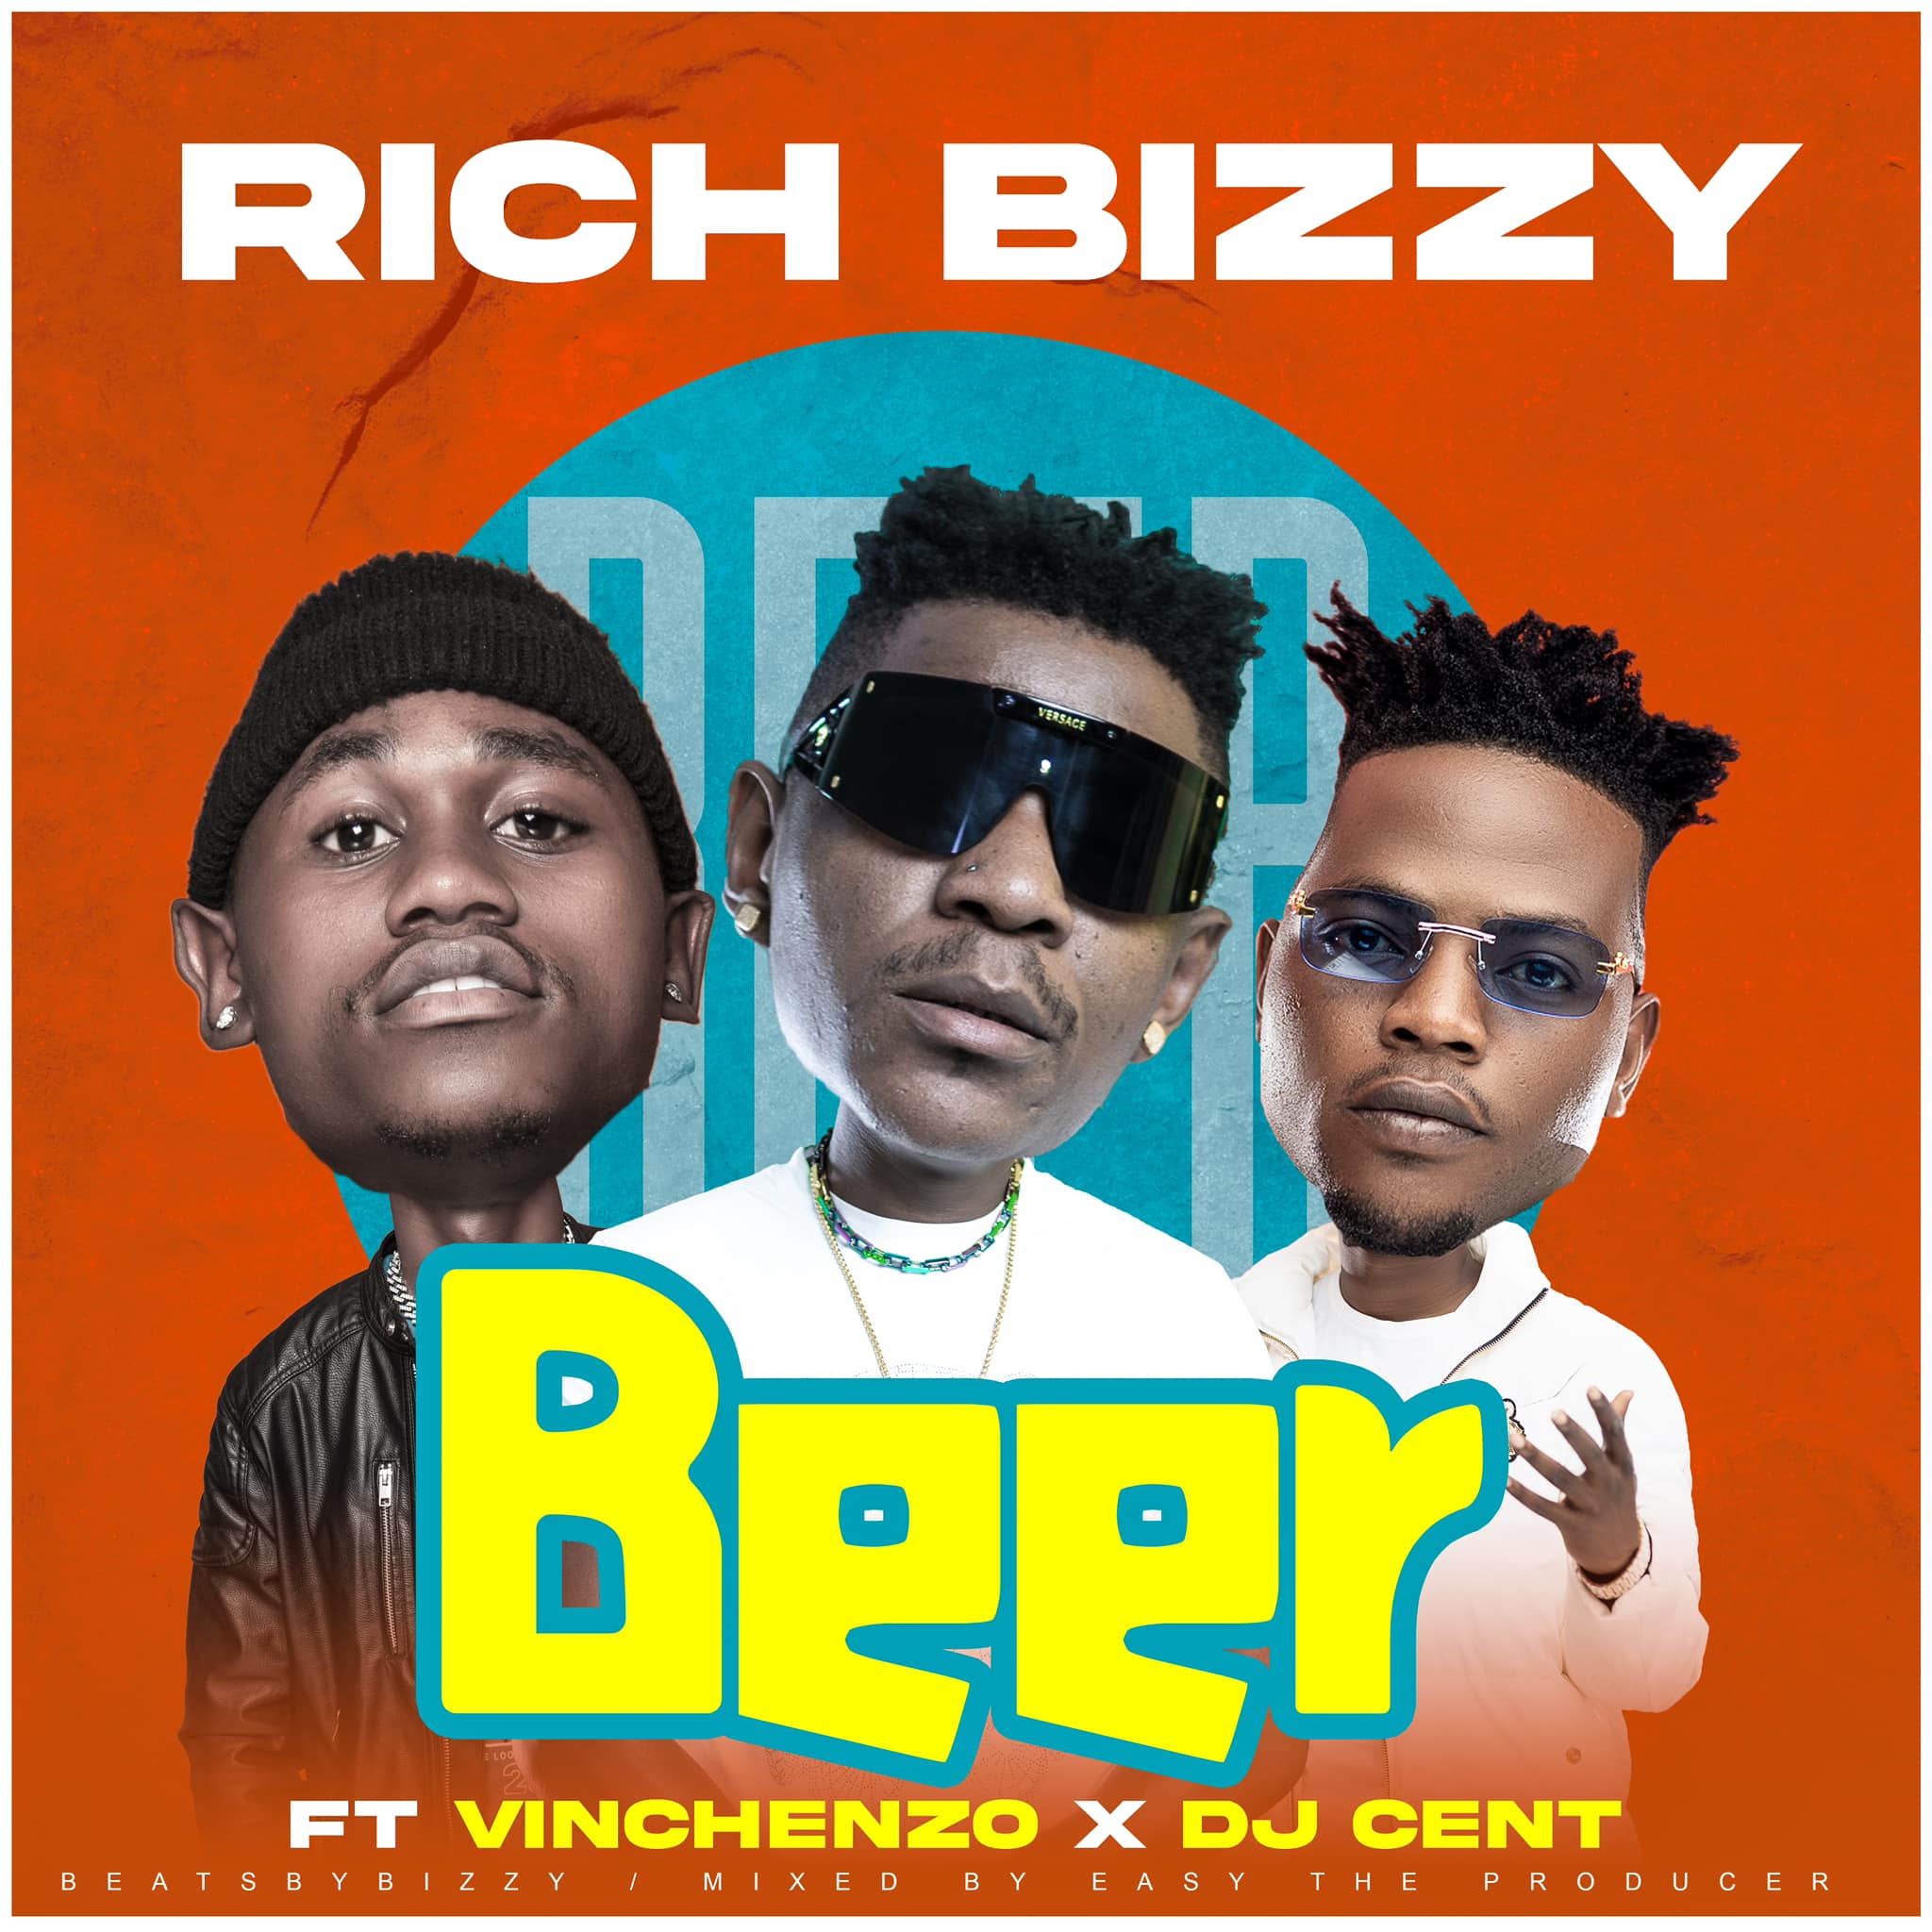 Rich Bizzy ft Vinchenzo – Beer Mp3 Download